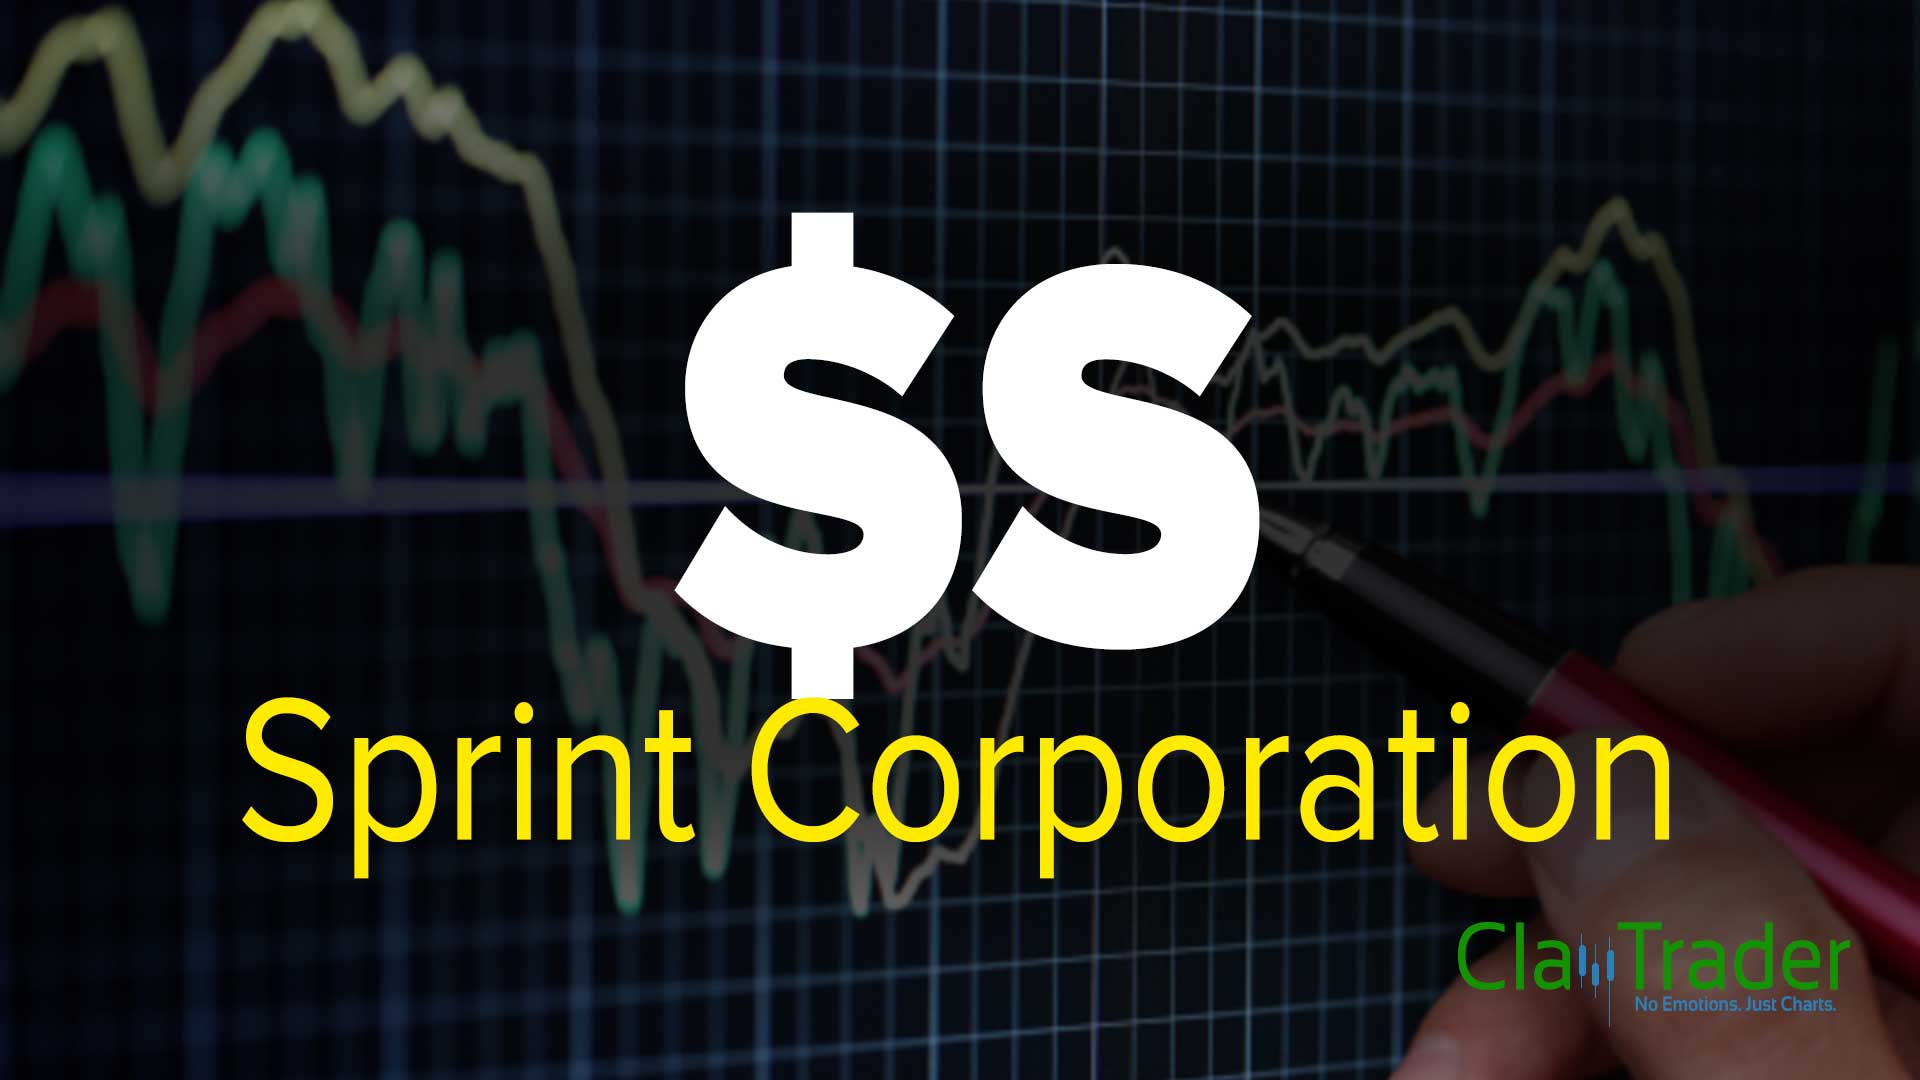 Sprint Corporation (S) Stock Chart Technical Analysis